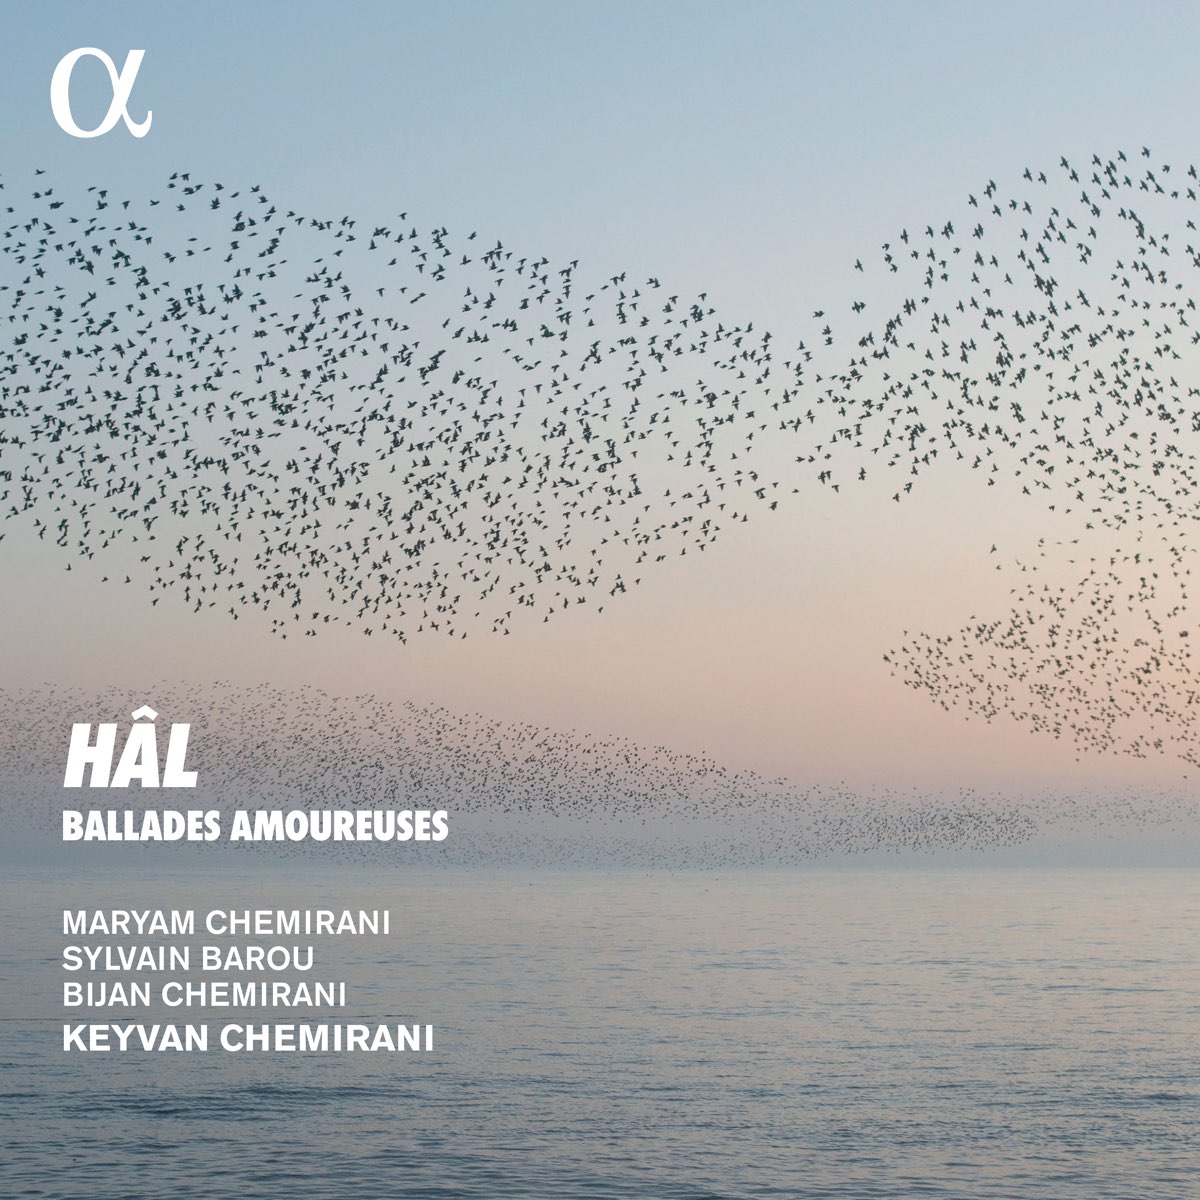 Maryam Chemirani, Sylvain Barou, Bijan Chemirani & Keyvan Chemirani – Hal. Ballades amoureuses (2021) [FLAC 24bit/48kHz]